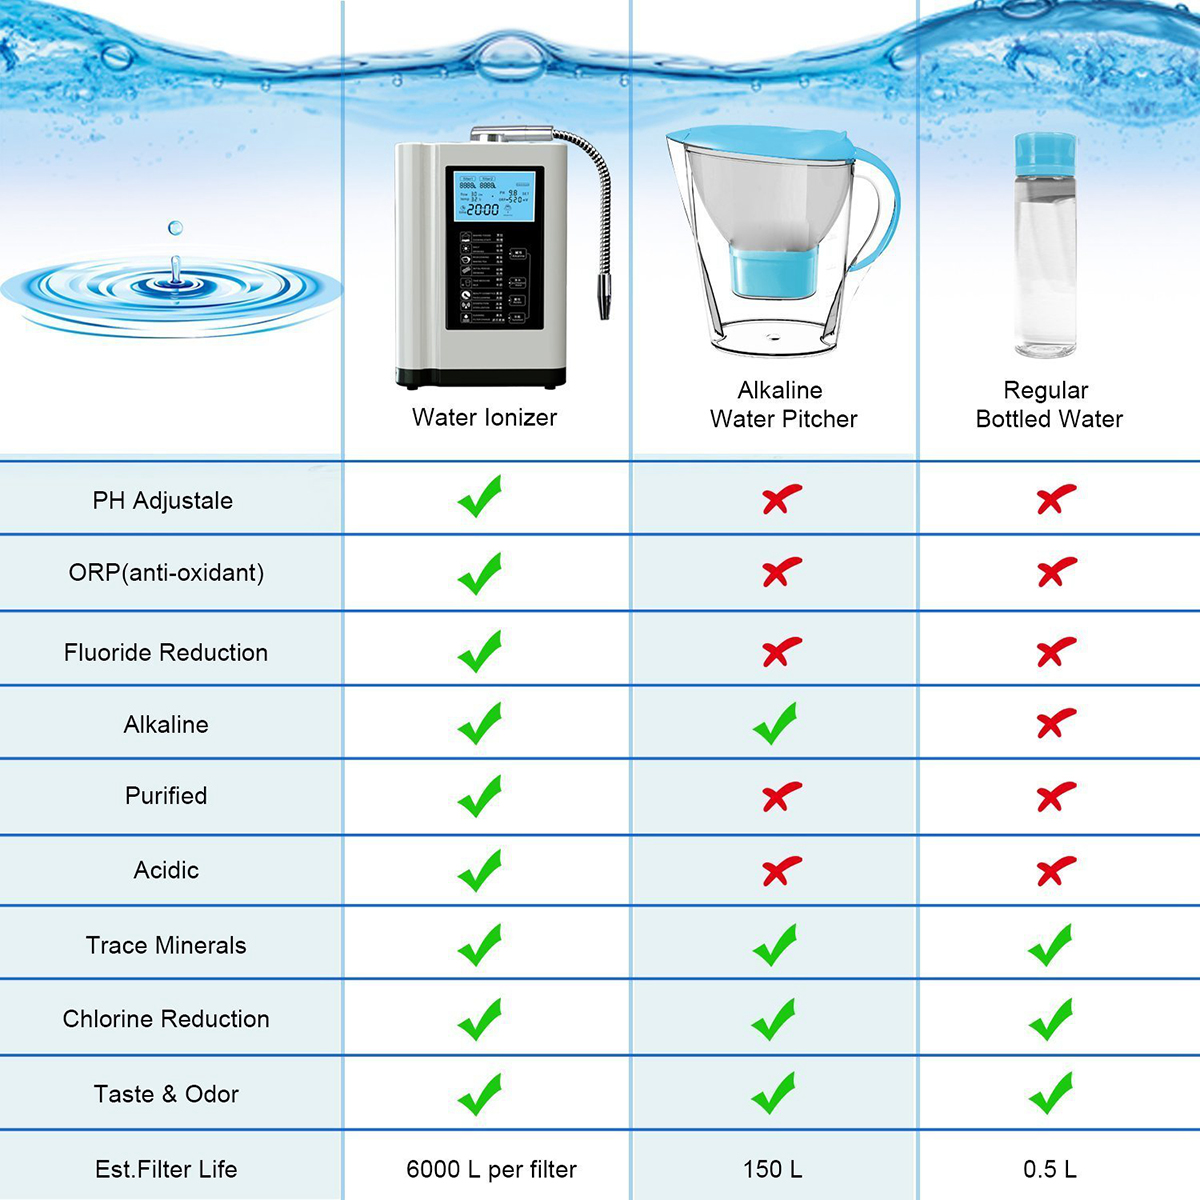 Ph restore alkaline water filter user manual pdf